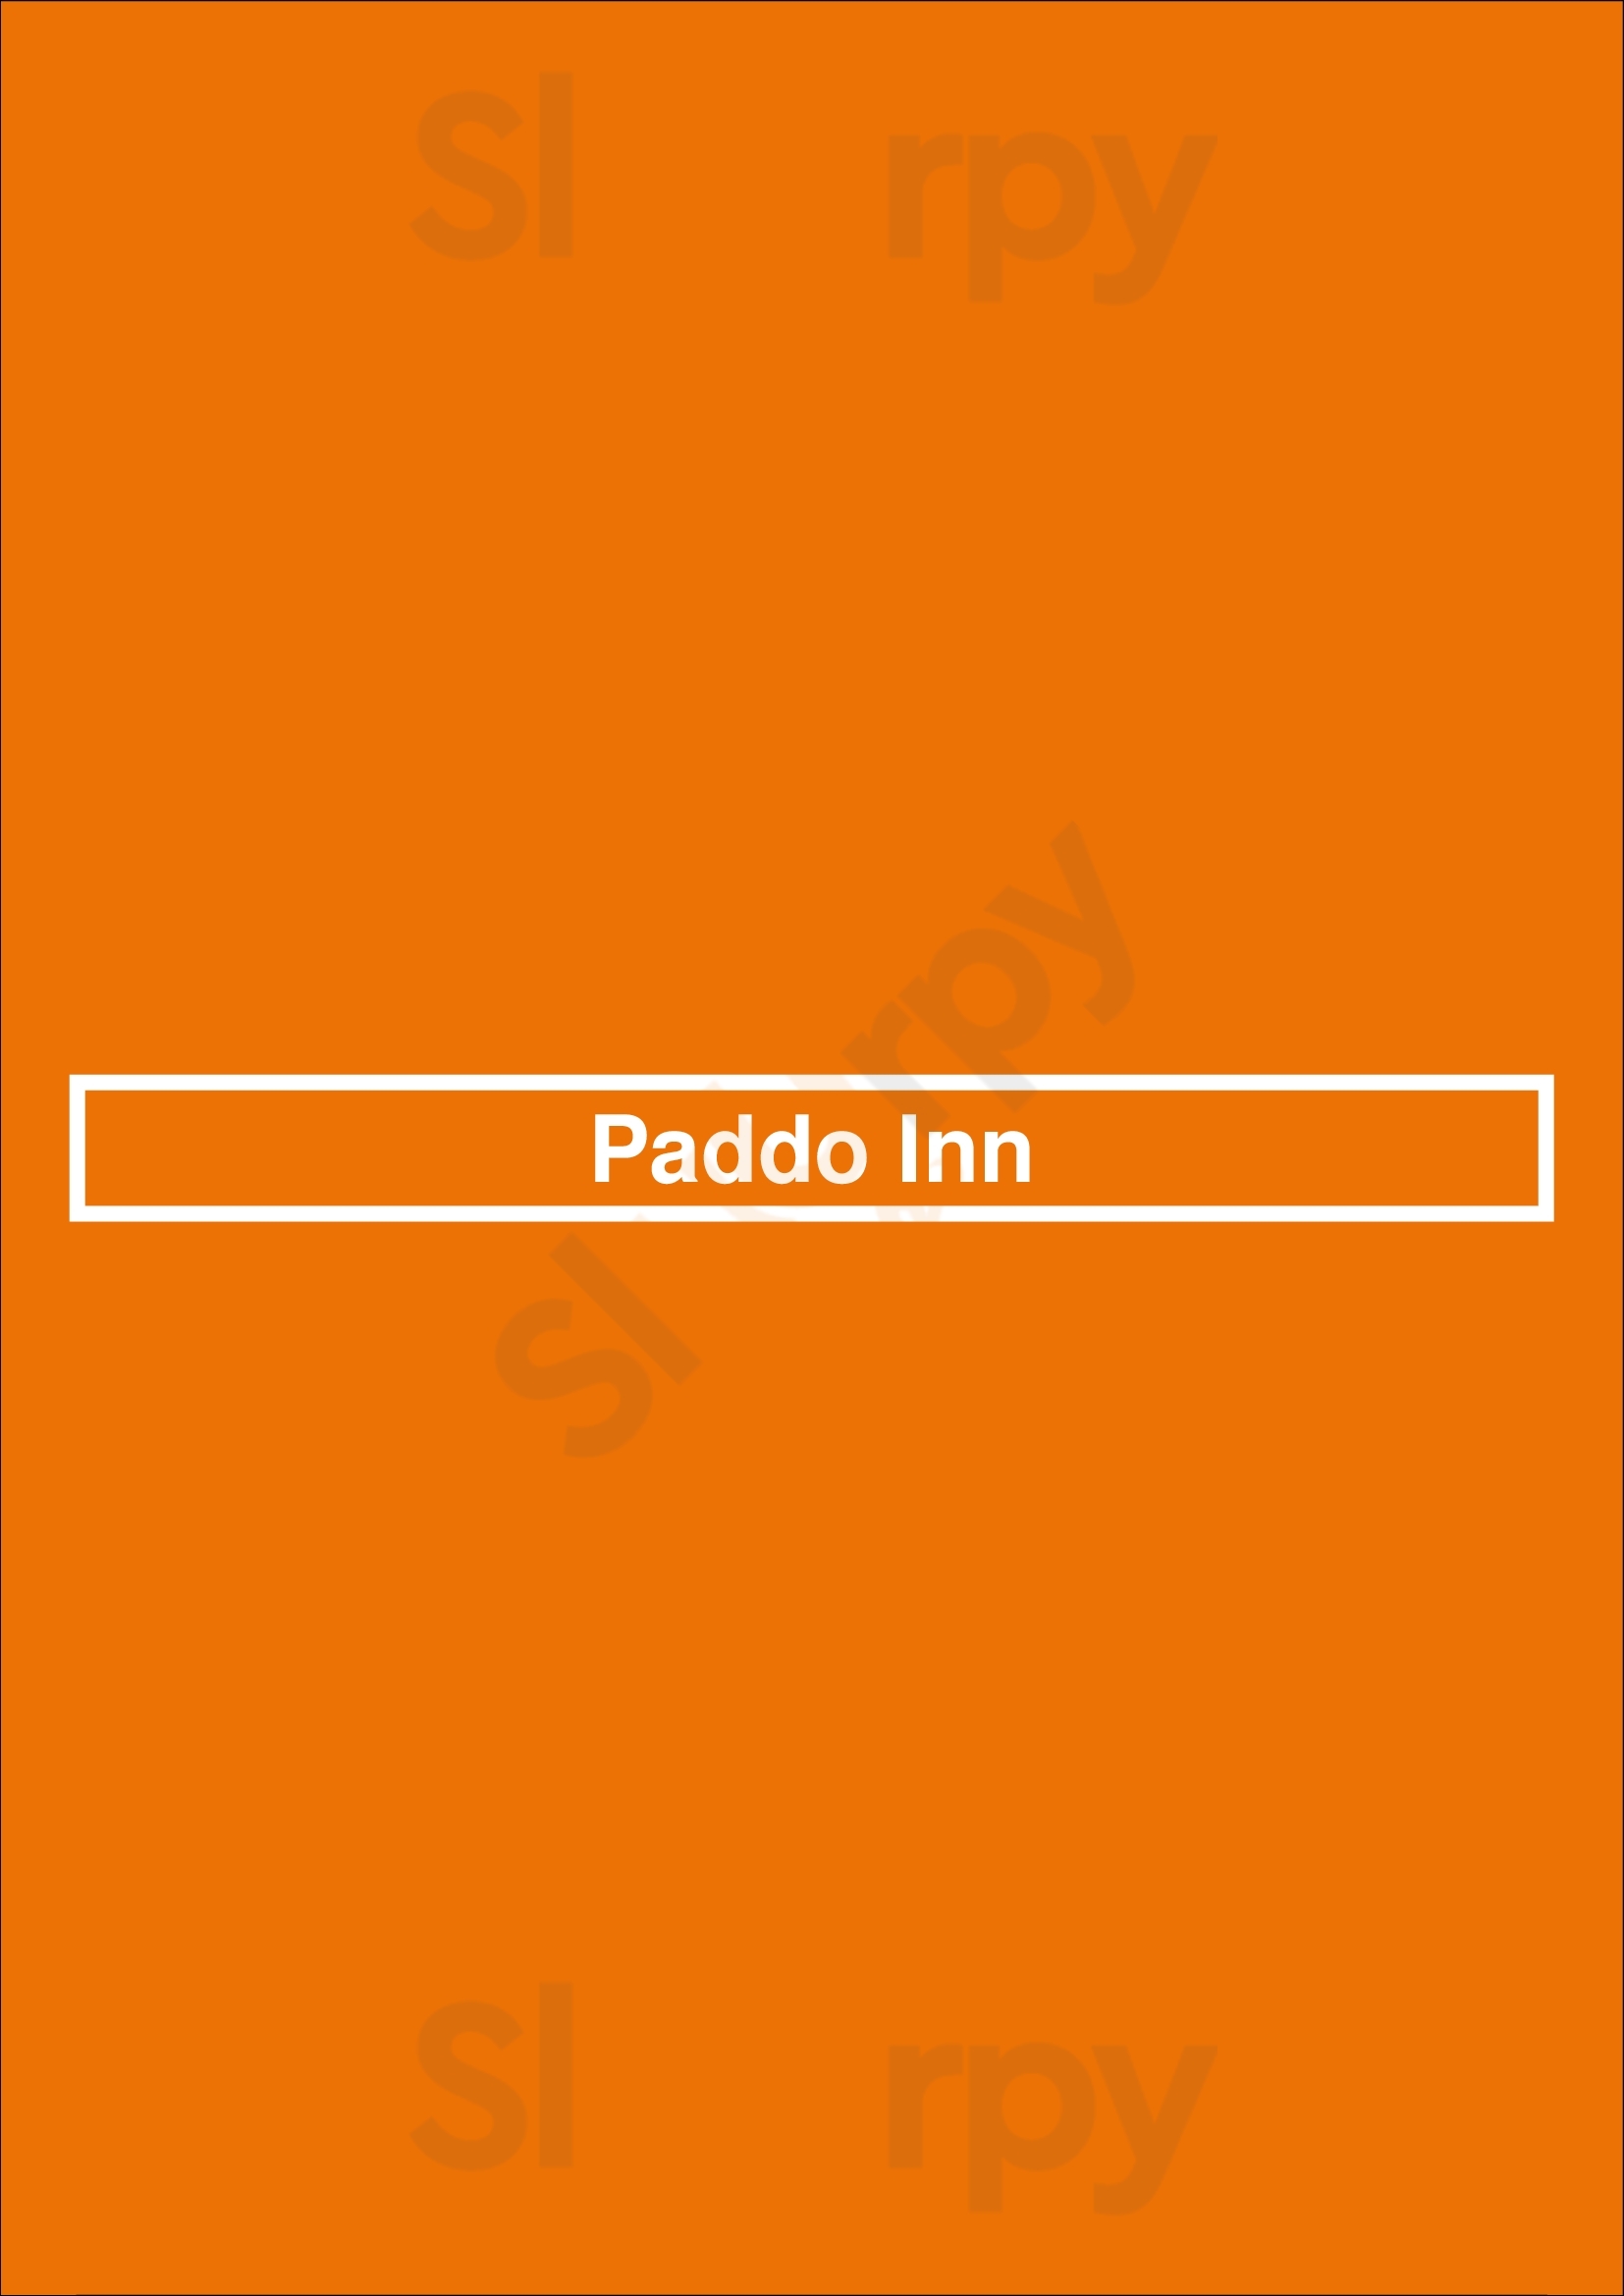 Paddo Inn Woollahra Menu - 1